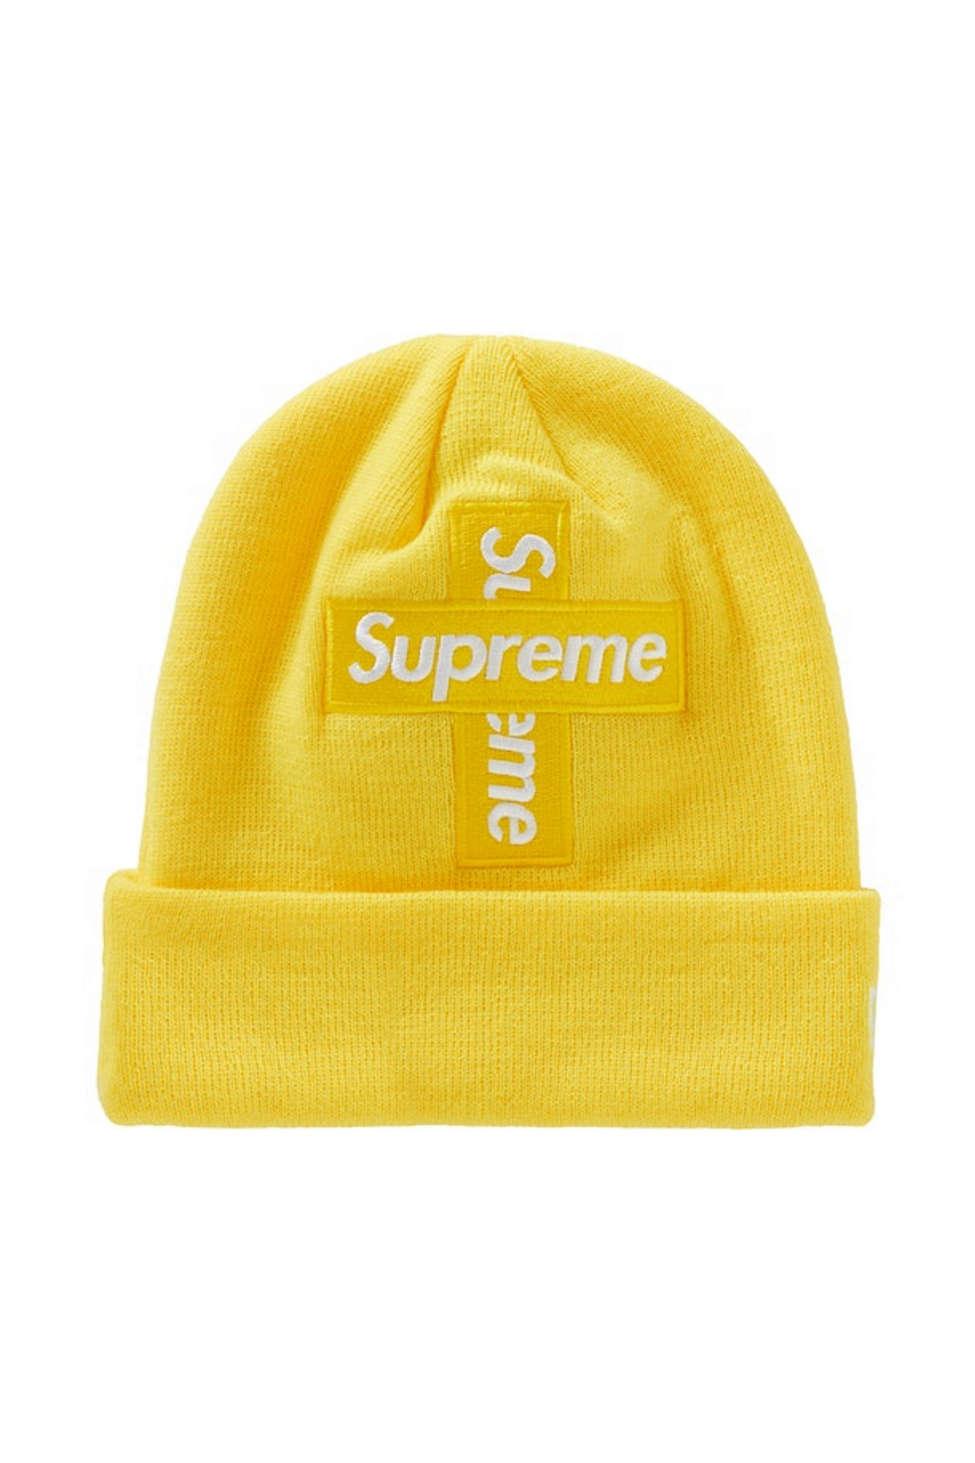 Supreme New Era Cross Box Logo Beanie in Yellow for Men